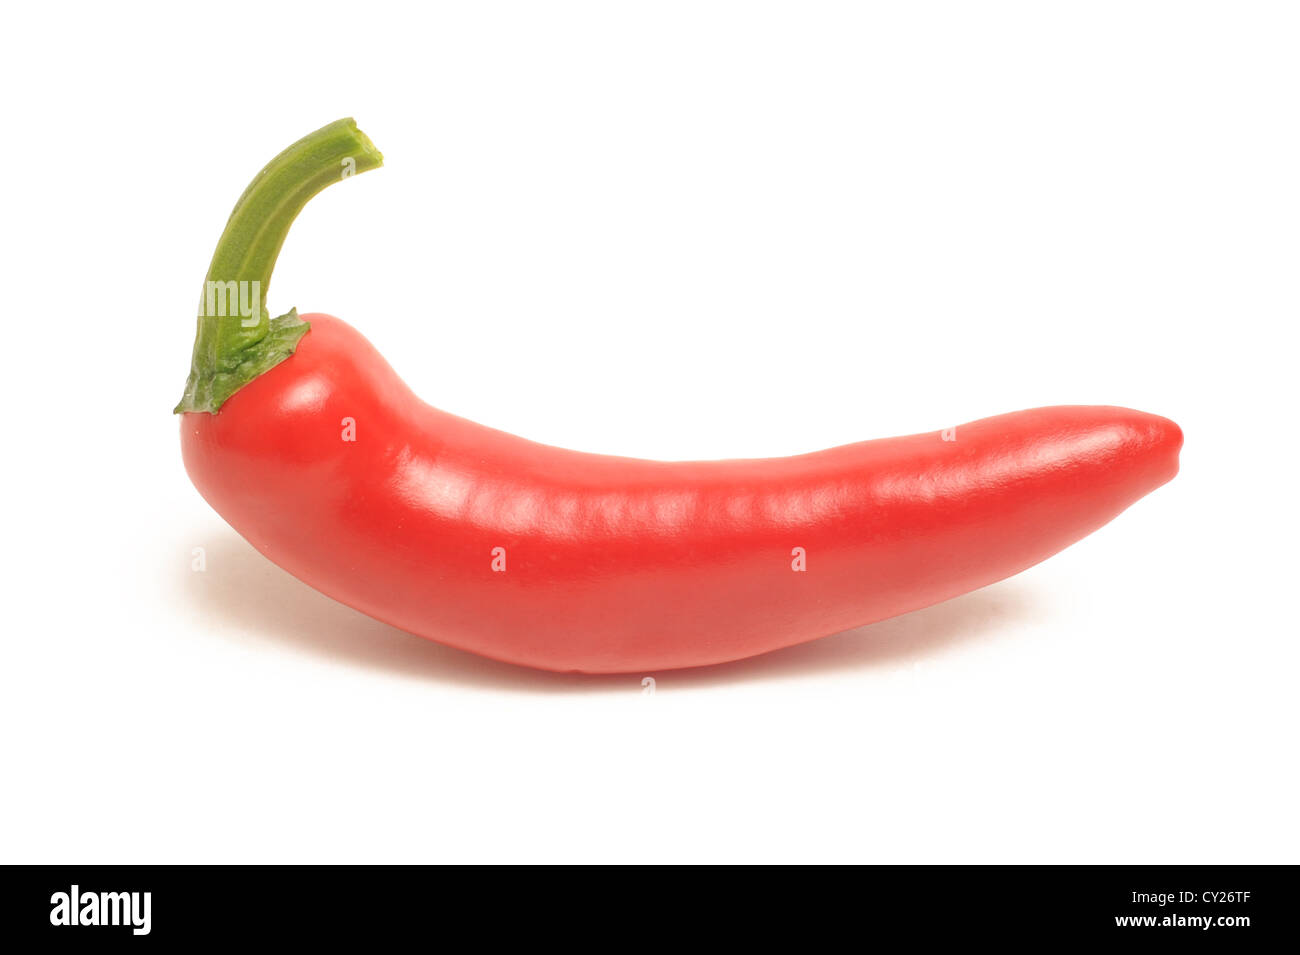 Red chili pepper Stock Photo